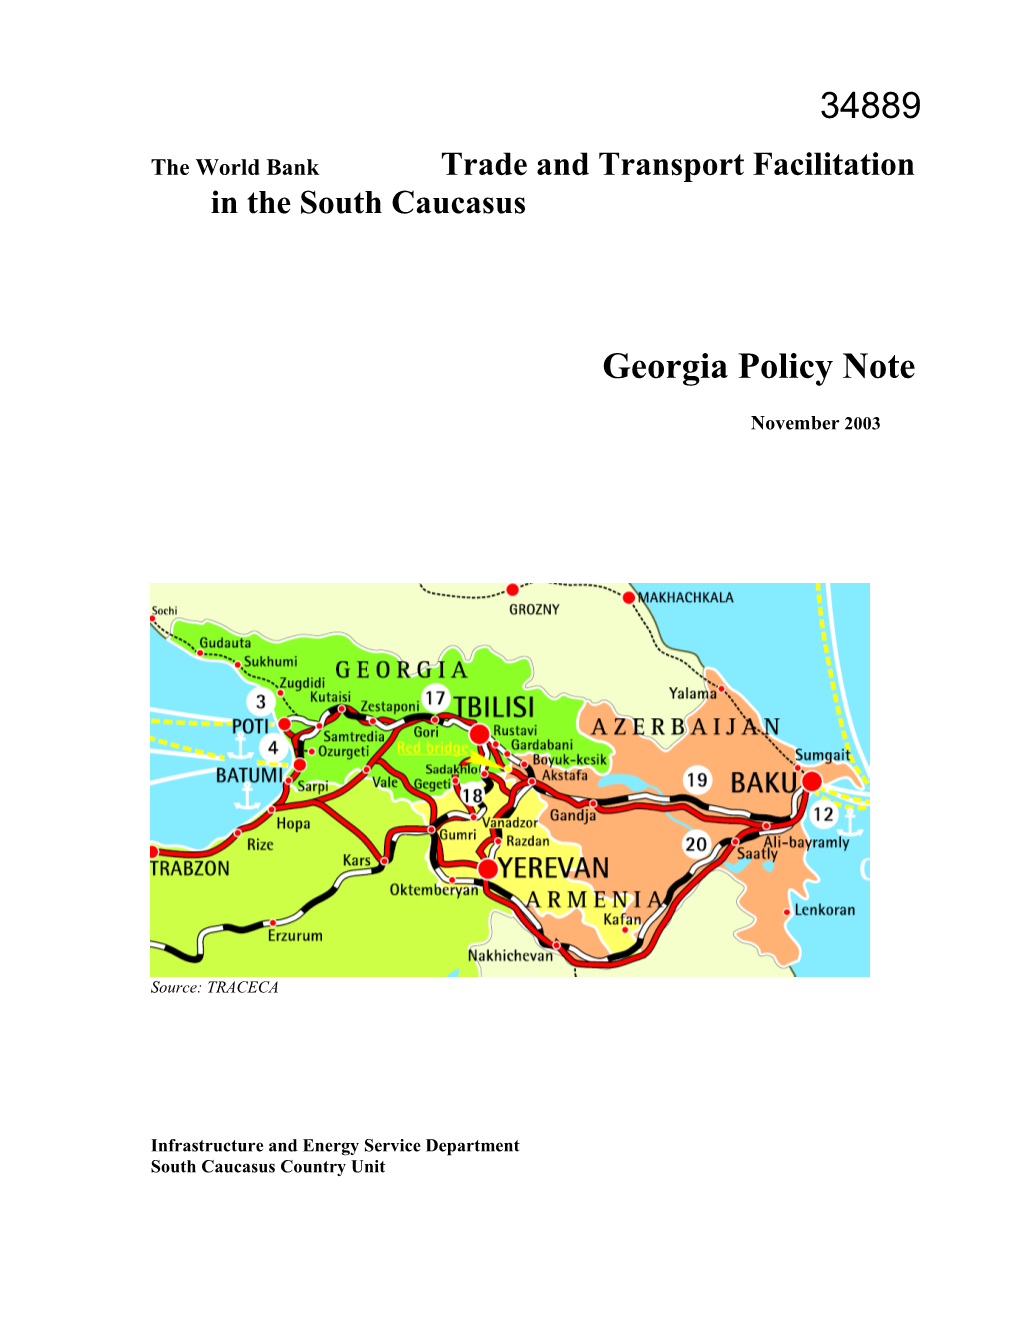 The World Bank Trade and Transport Facilitation